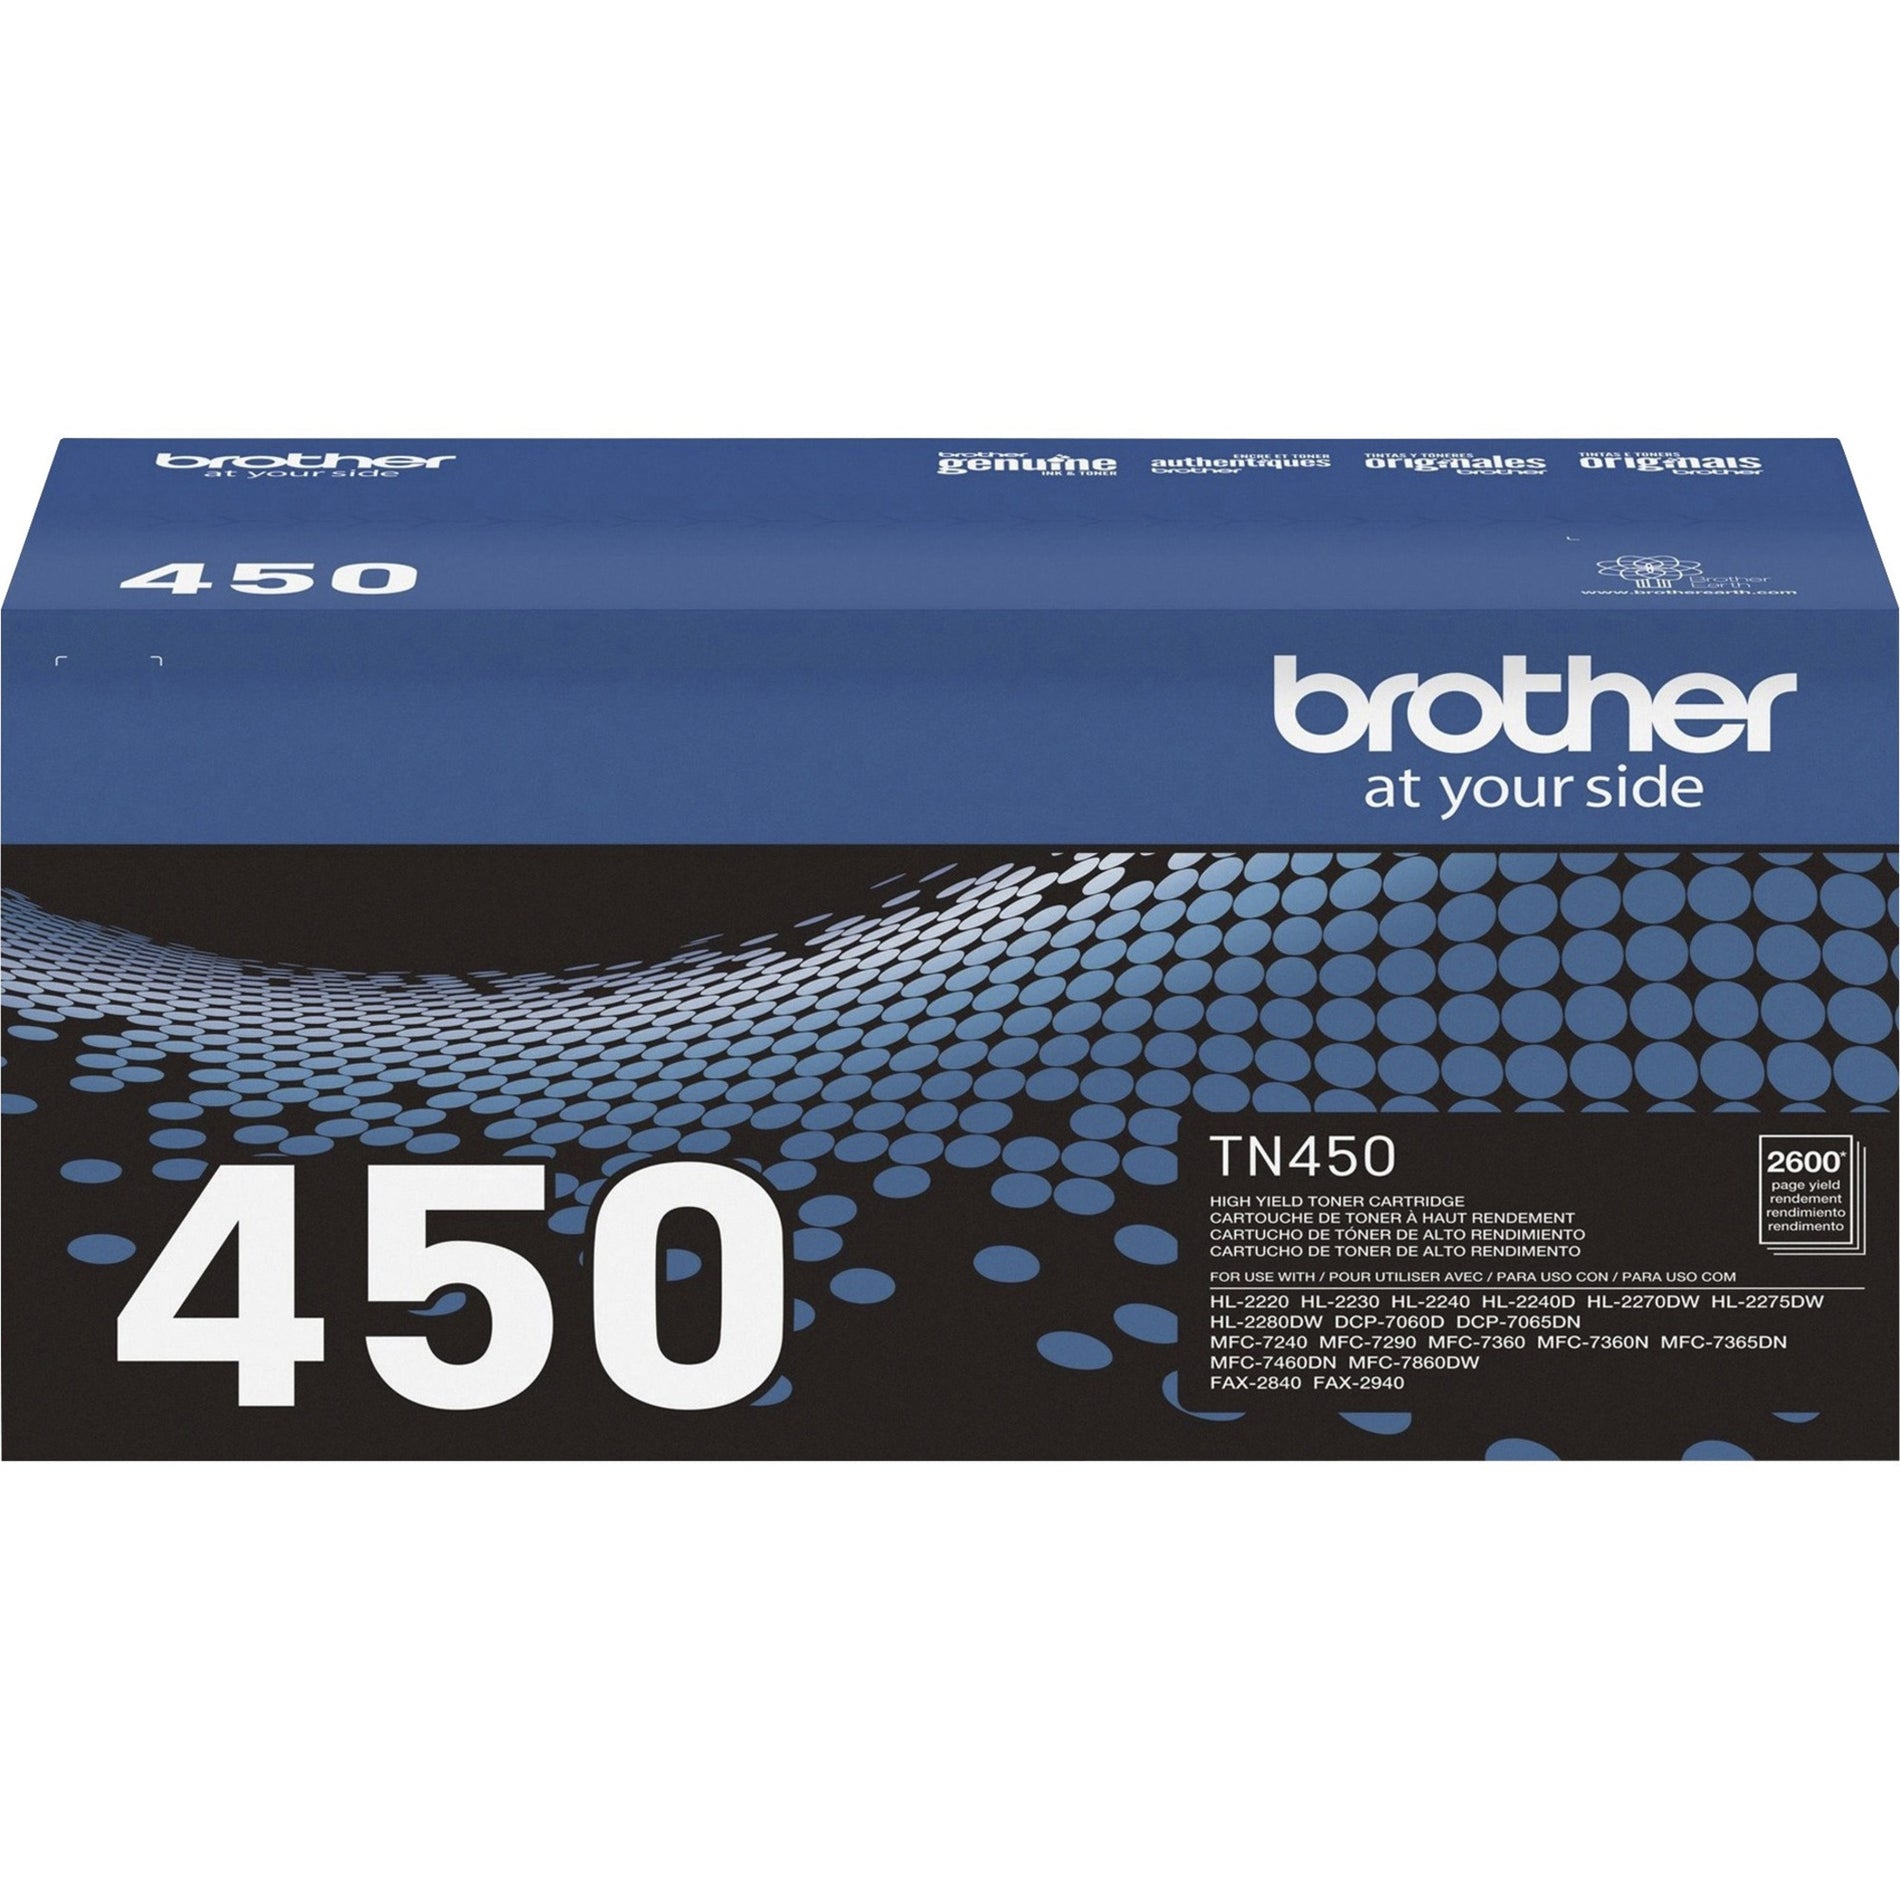 Brother TN450 Mono Laser High Yield Black Toner Cartridge, Original, 2600 Pages